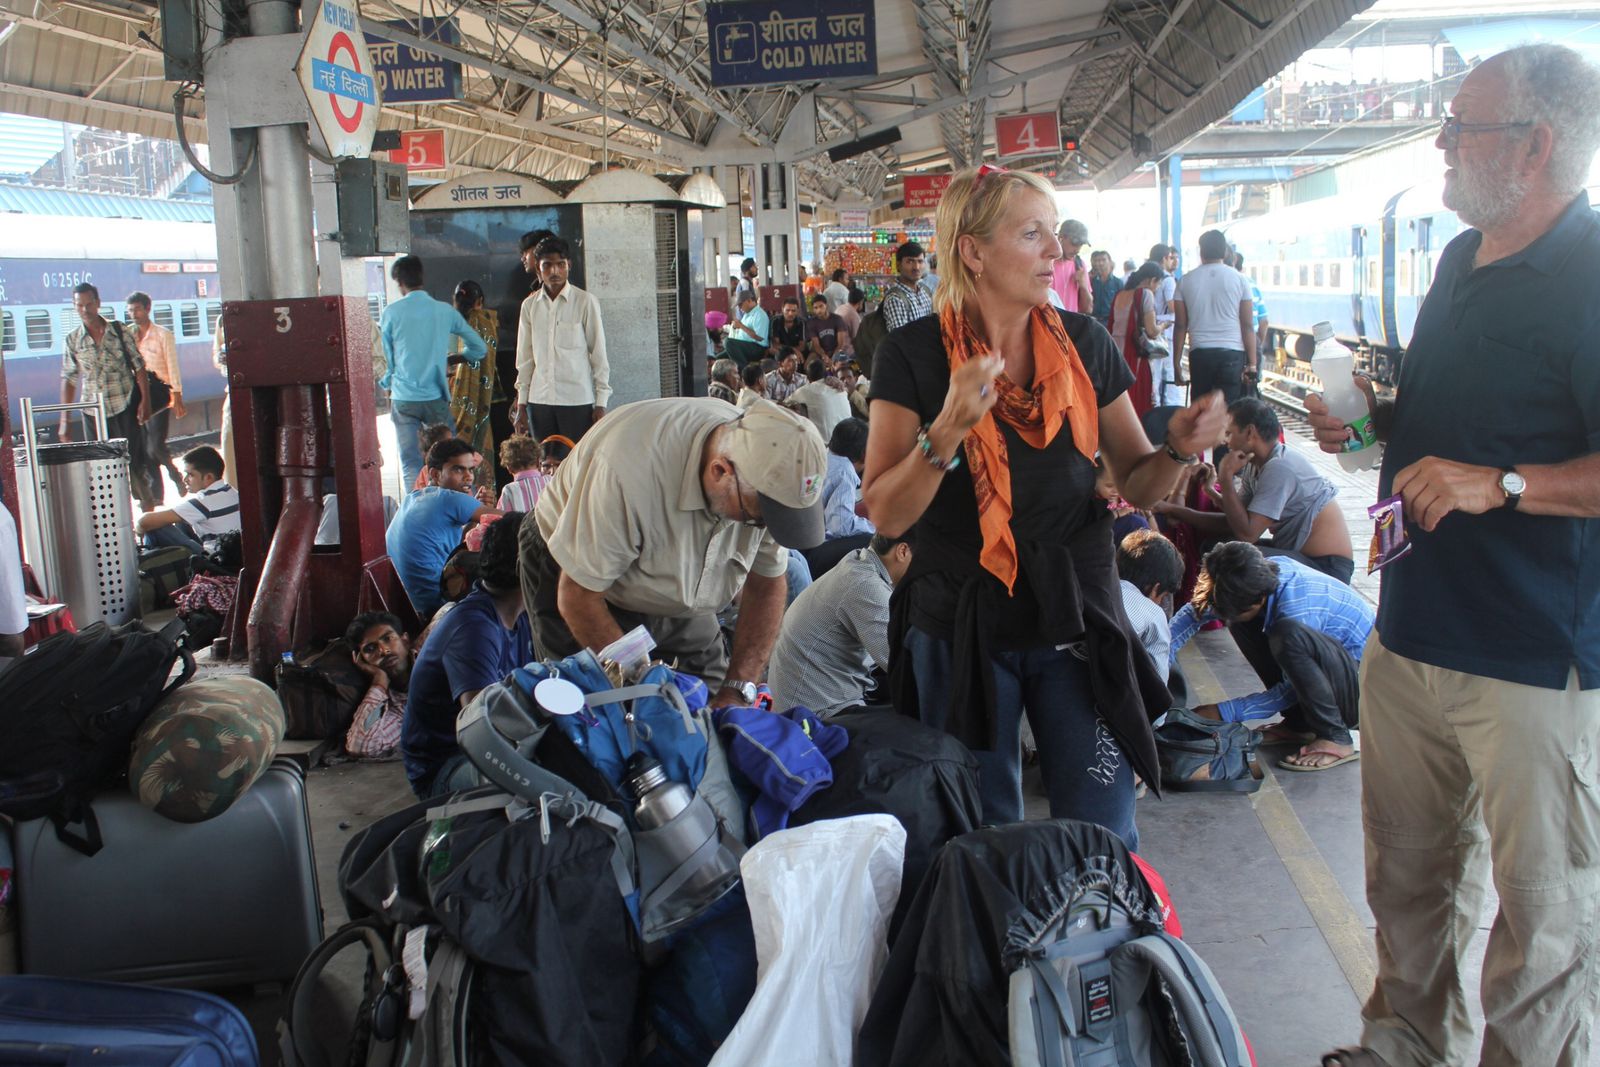 Trajet en bus local de Dharamsala a Pathankot et quai de gare en attente du train de Delhi a Agra